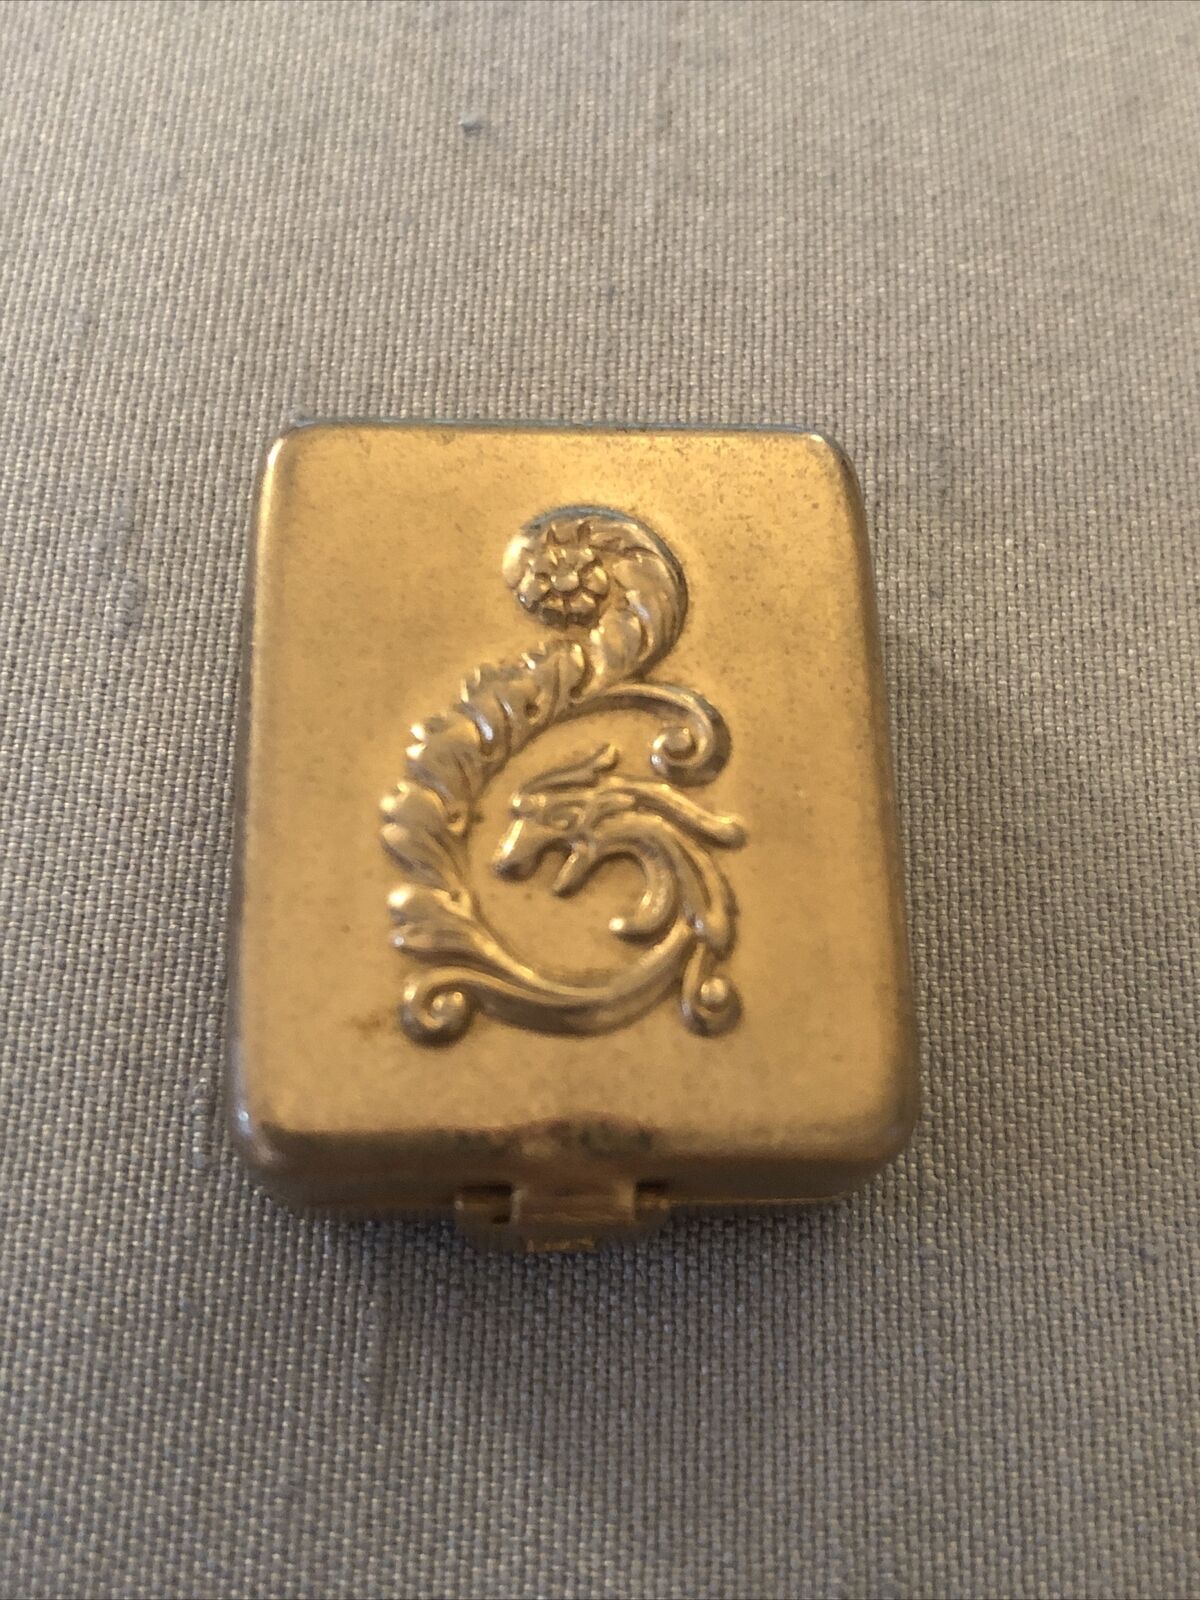 Antique Dragon Miniature Stamp or trinket box with hidden hanger rare